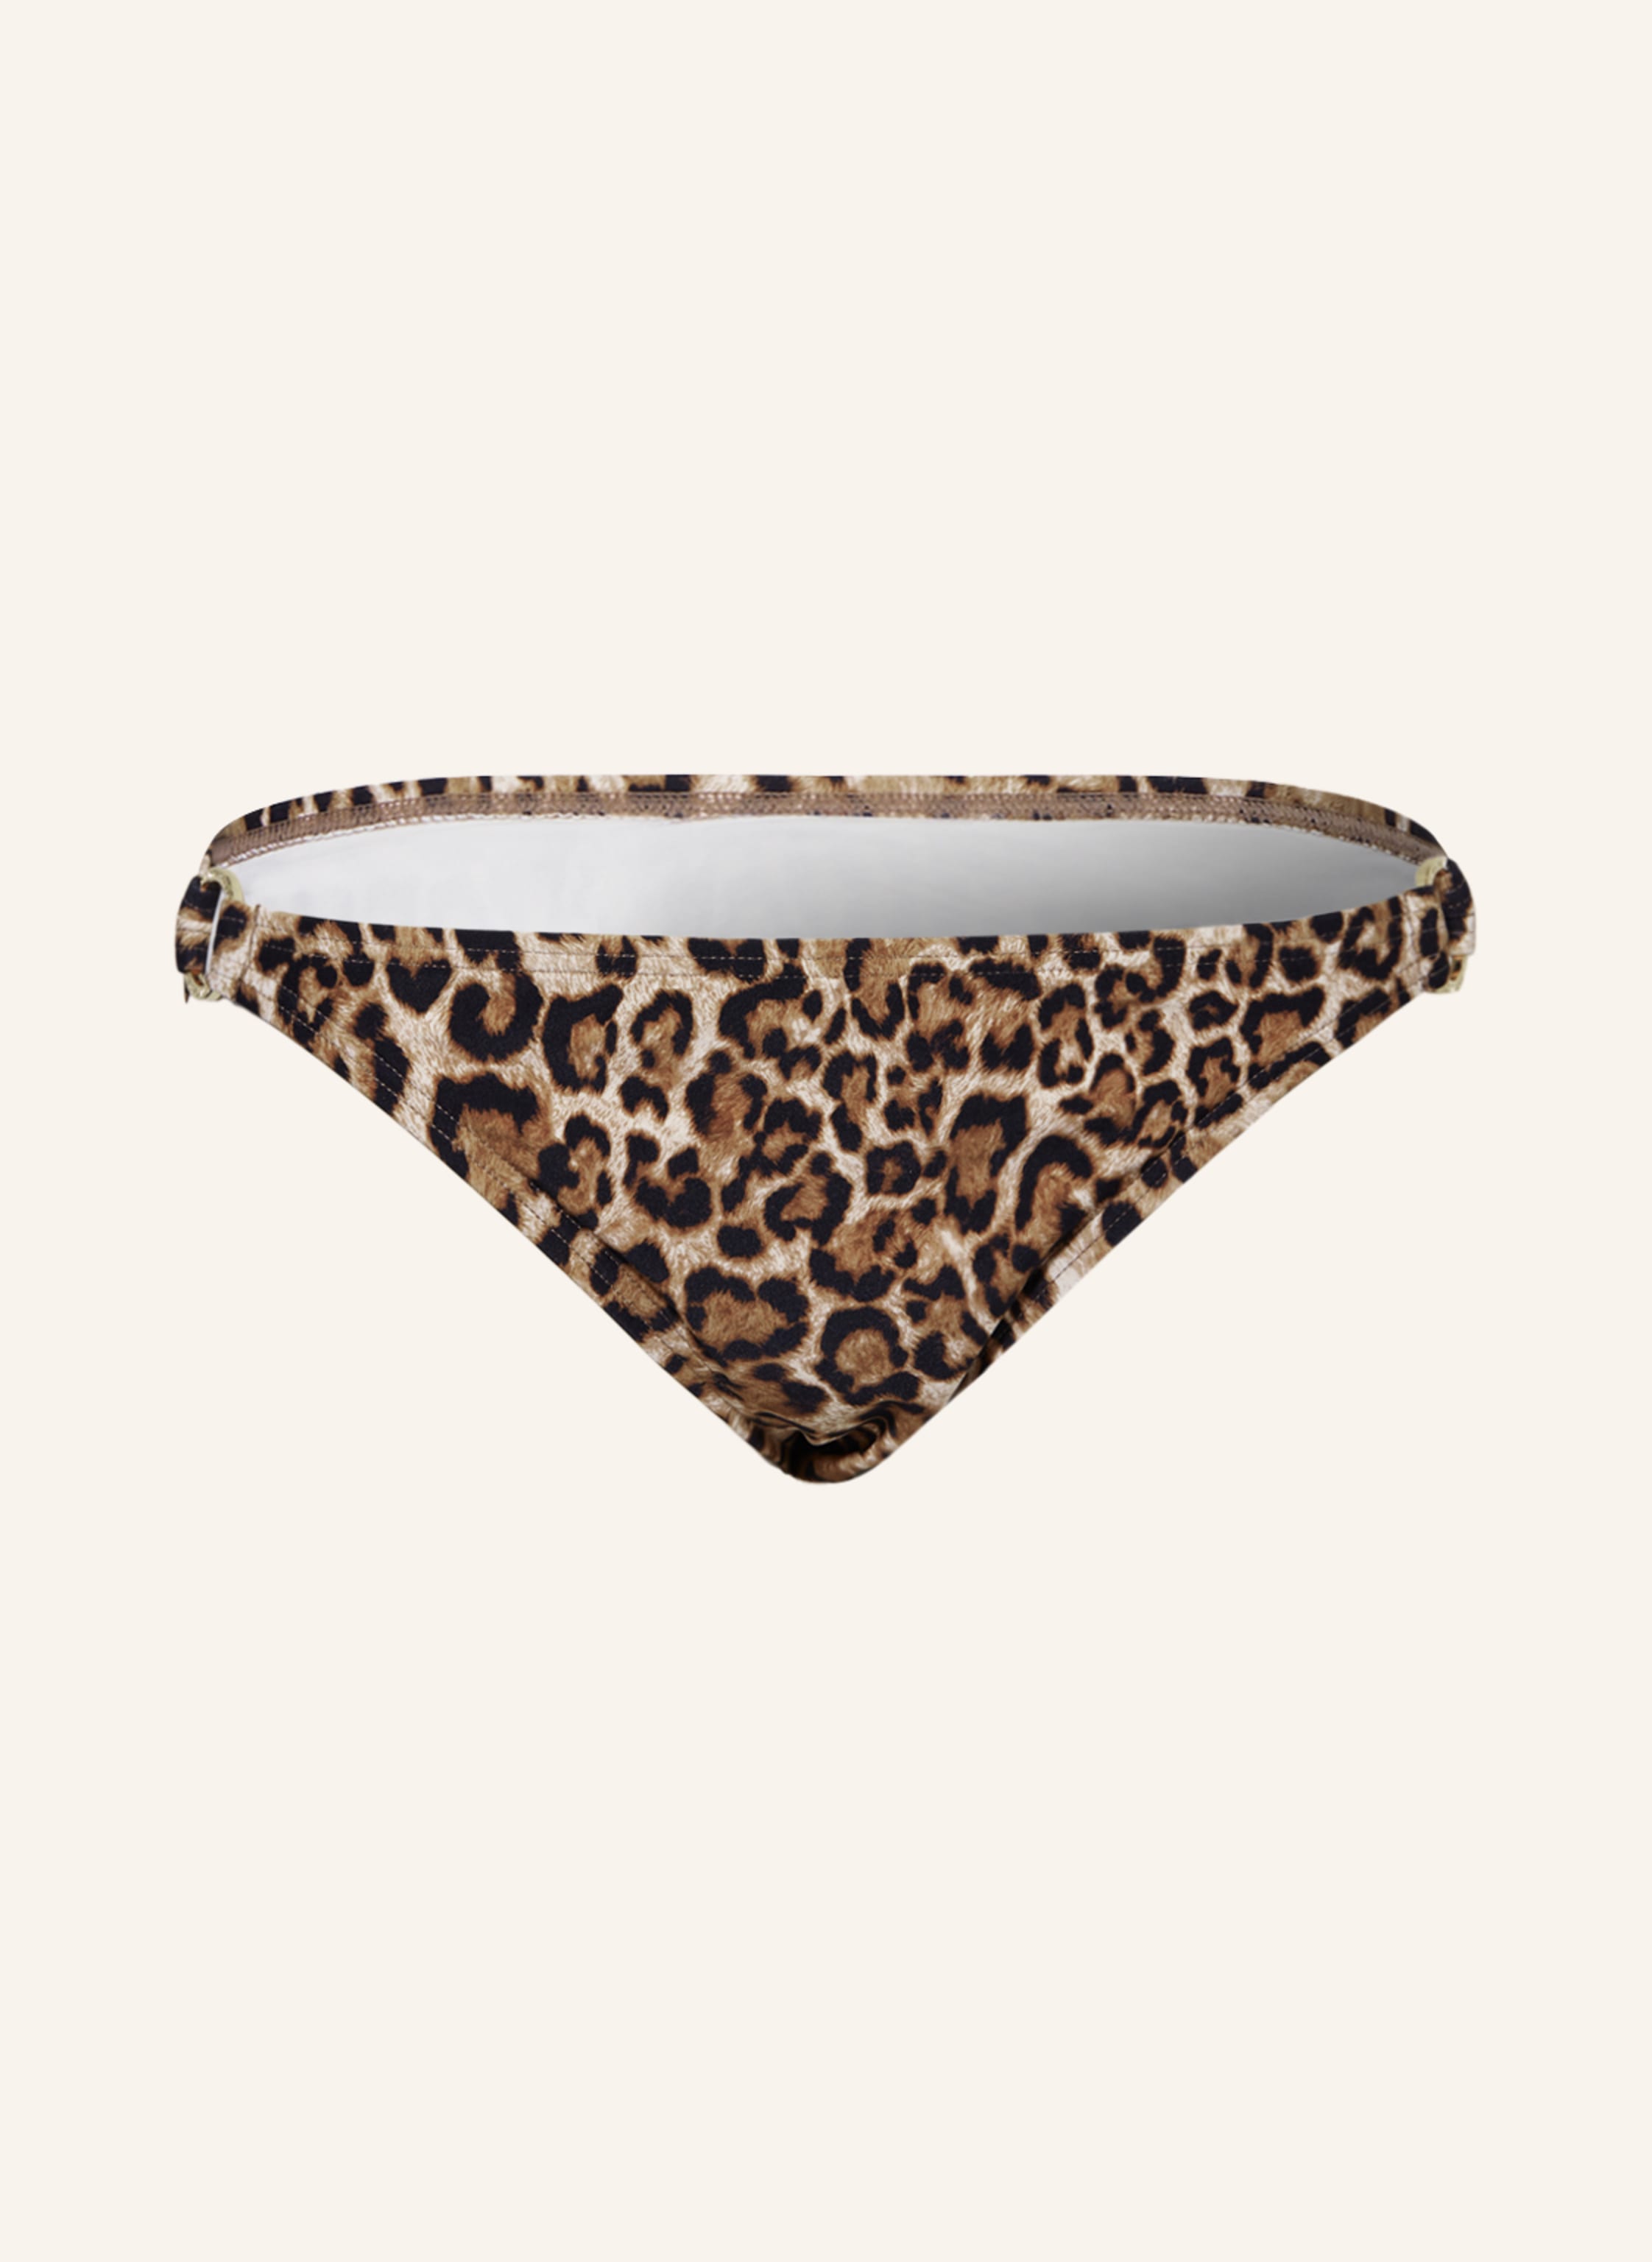 MICHAEL KORS Basic bikini bottoms WILDCAT in brown/ black | Breuninger